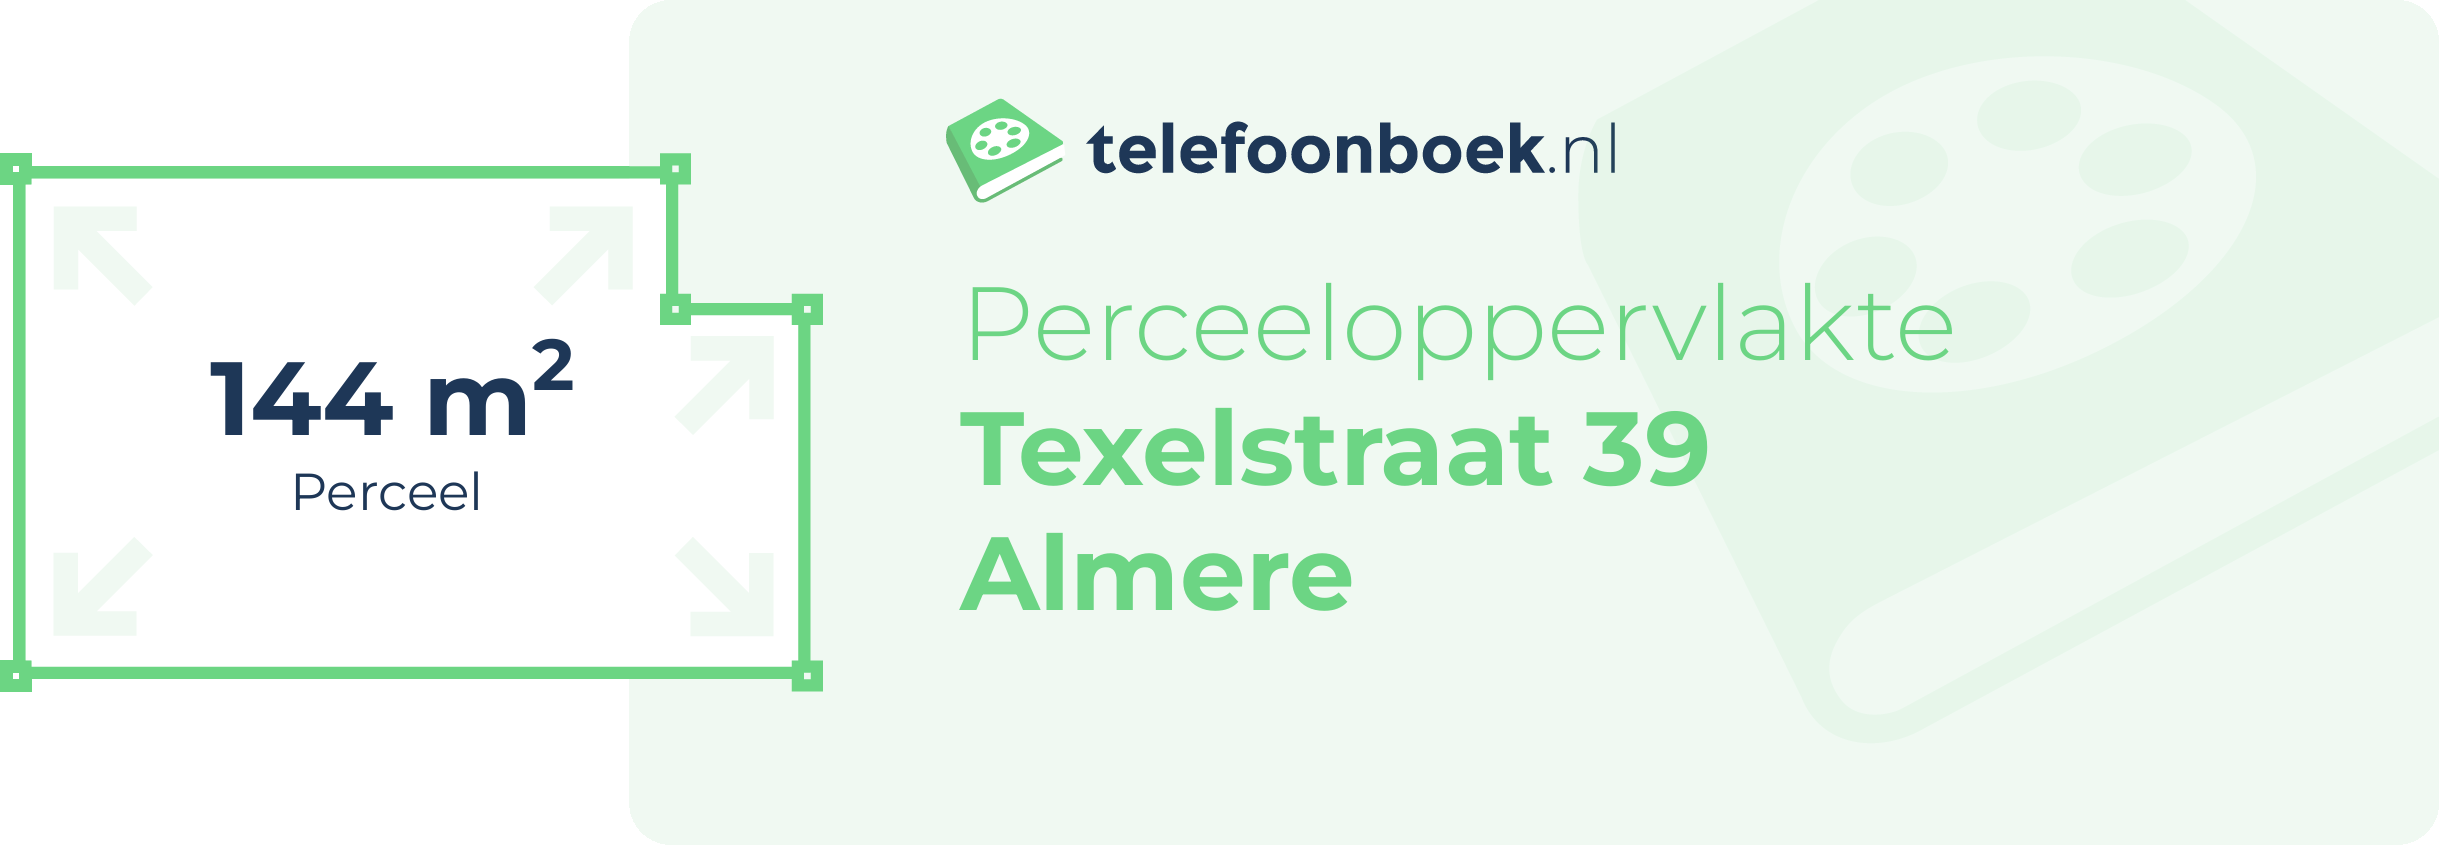 Perceeloppervlakte Texelstraat 39 Almere